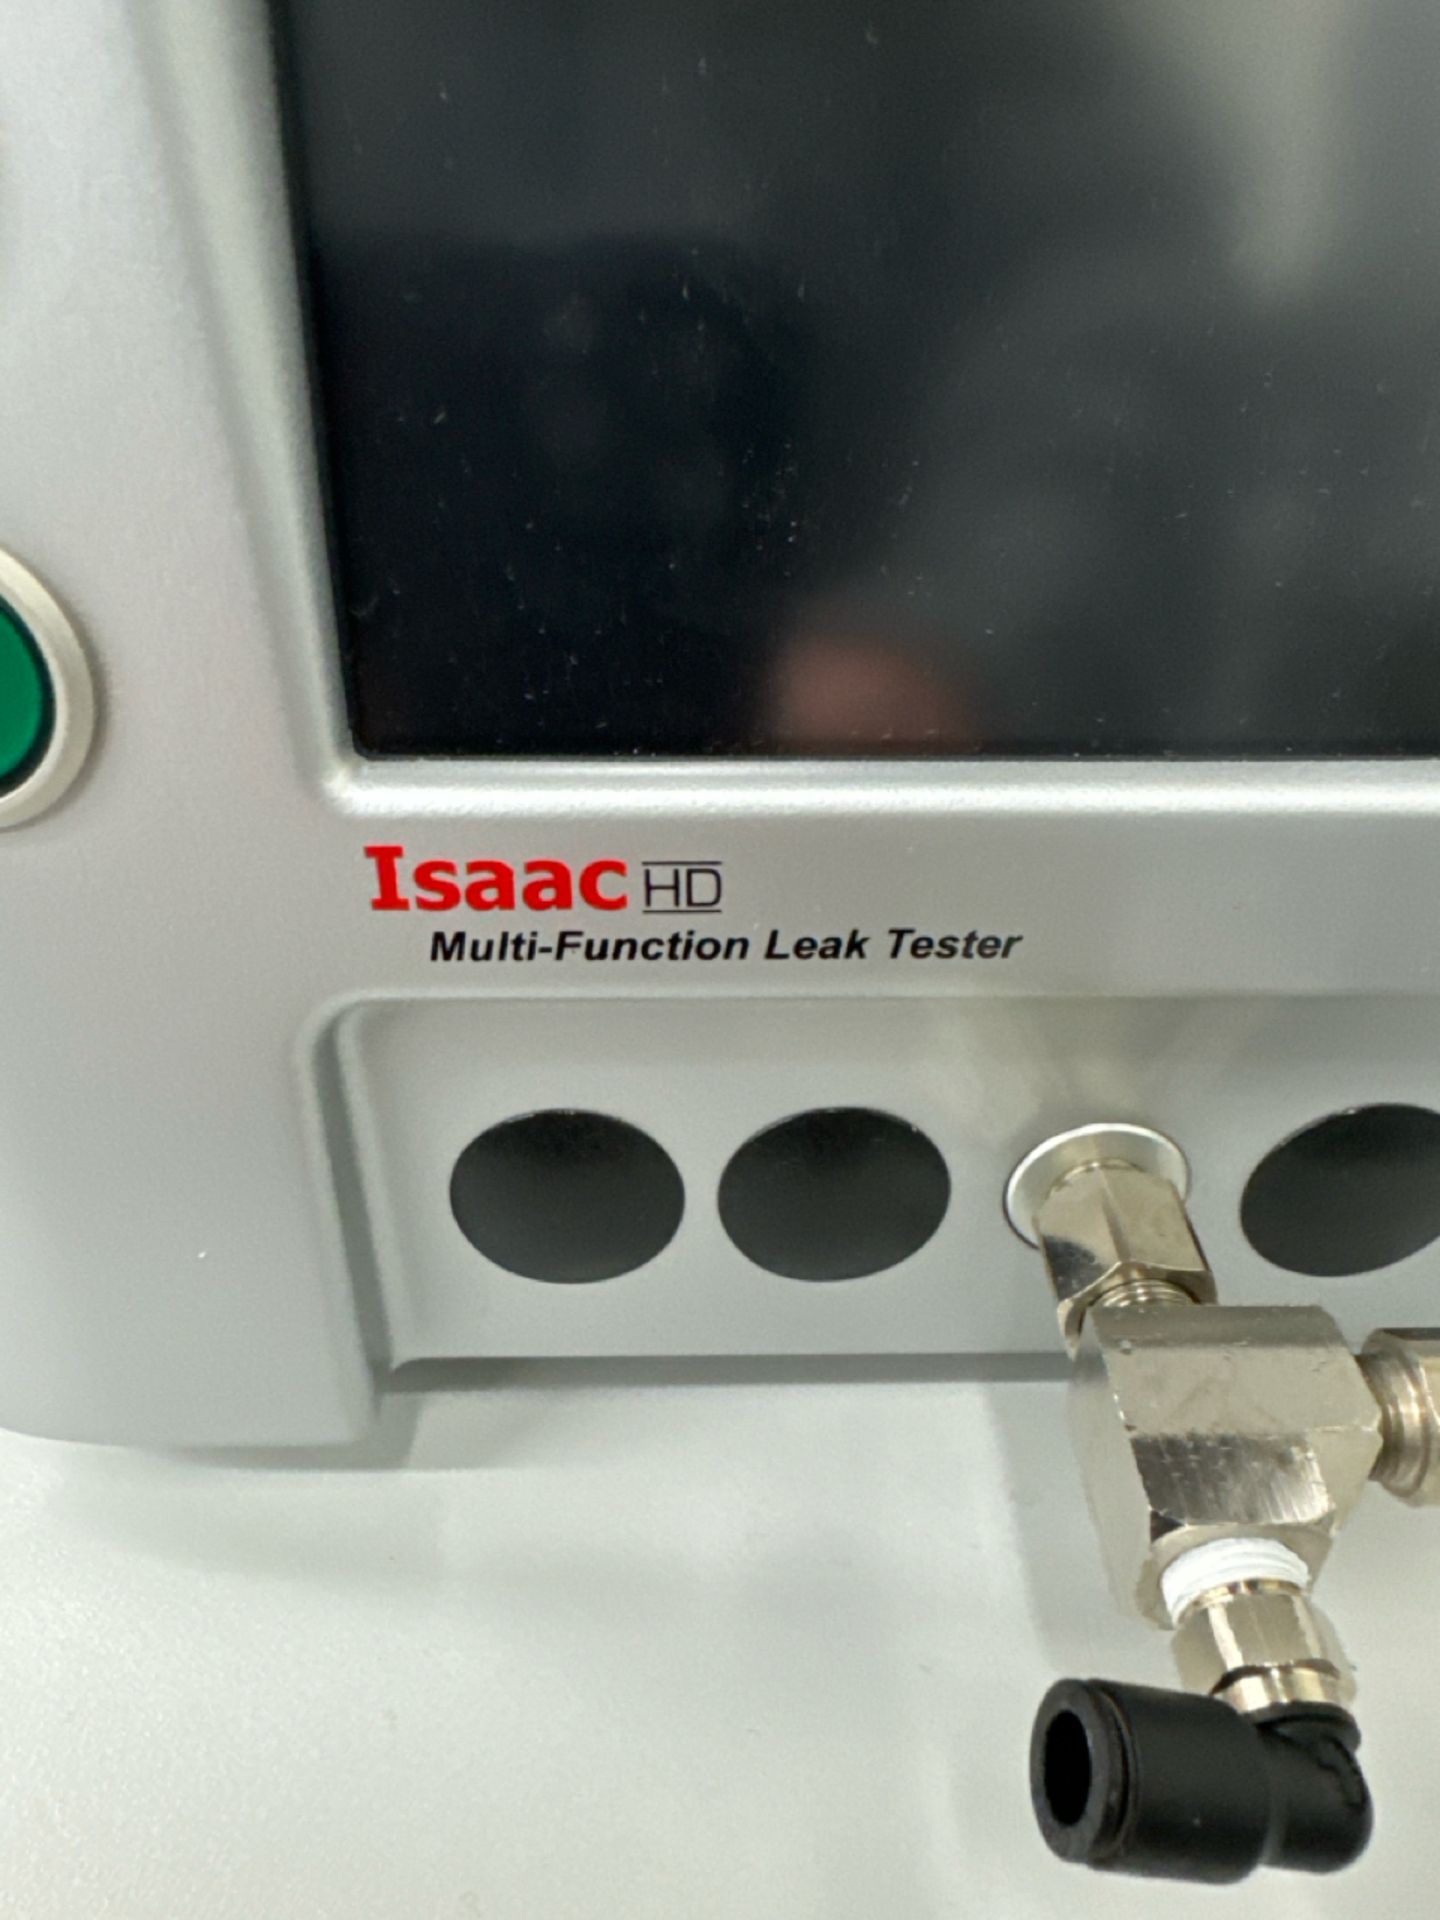 Isaac HD Multi-Function Leak Tester - Image 2 of 3